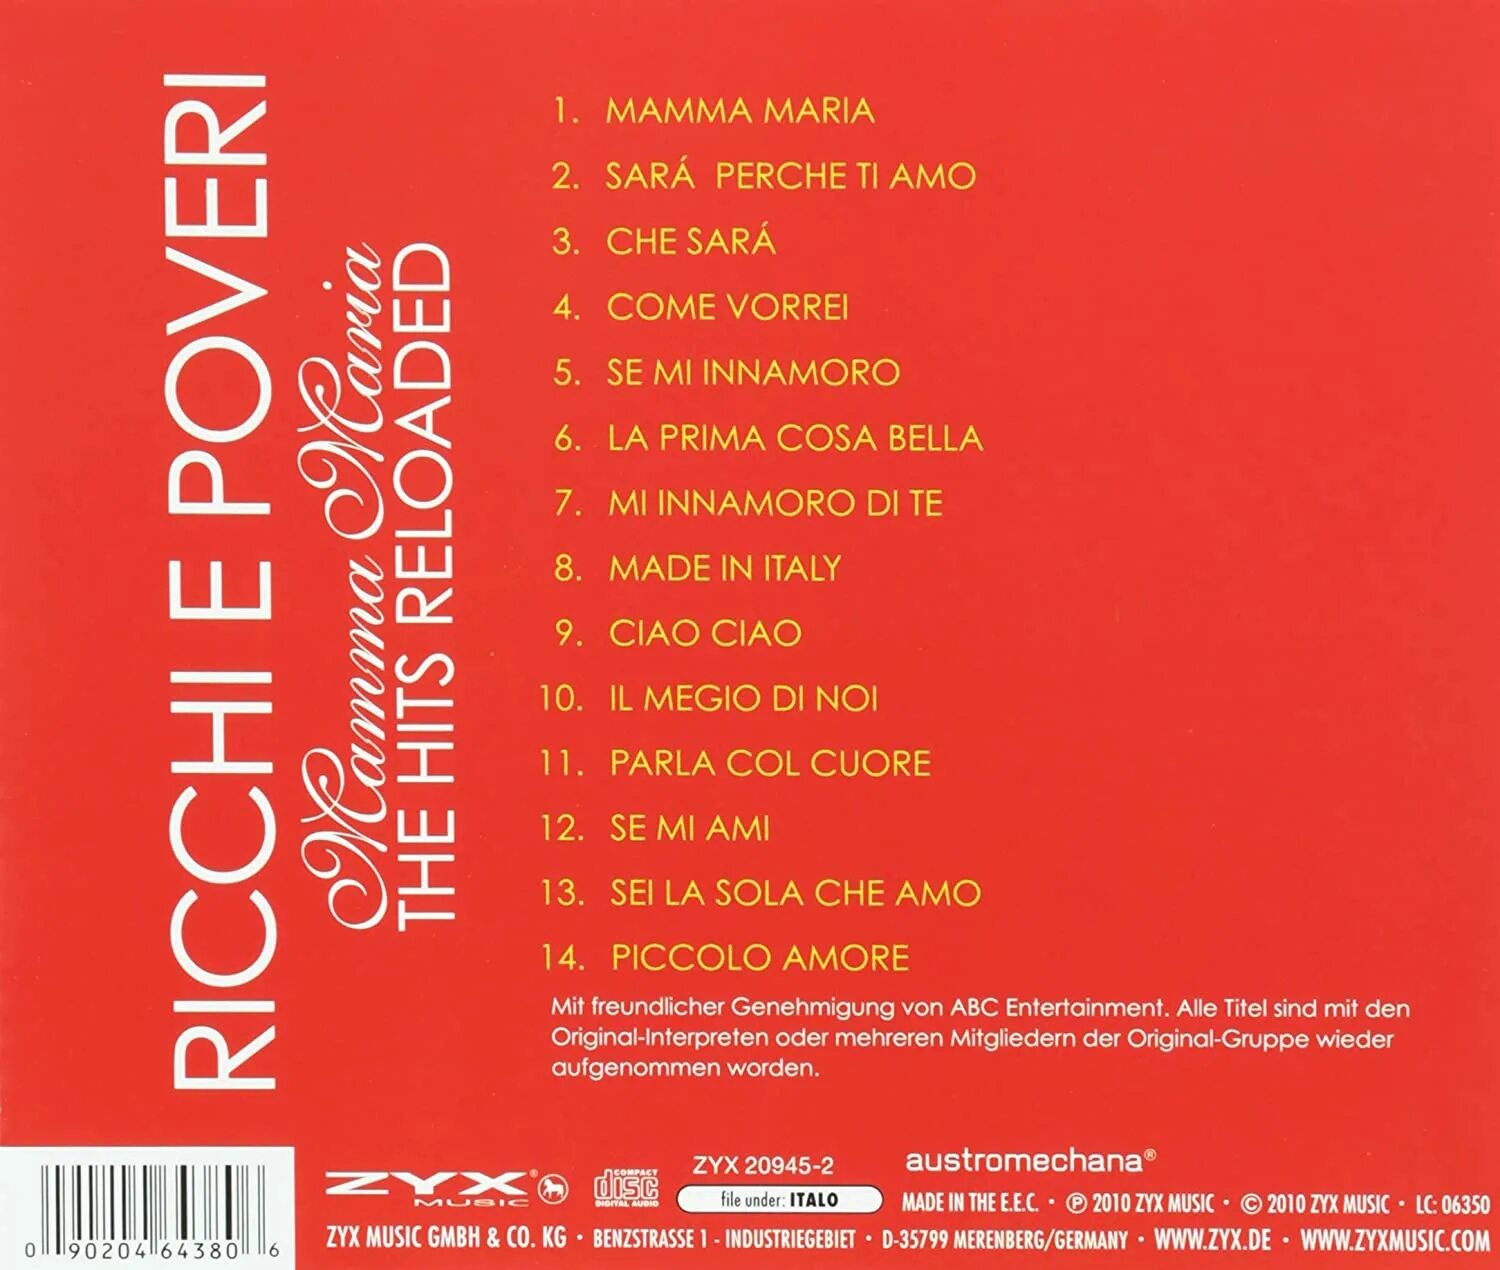 Mamma maria ricchi e. Mamma Maria: the Hits Reloaded Ricchi e Poveri. Ricchi e Poveri - (1994) - the collection. Ricchi e Poveri 2009 Greatest Hits.